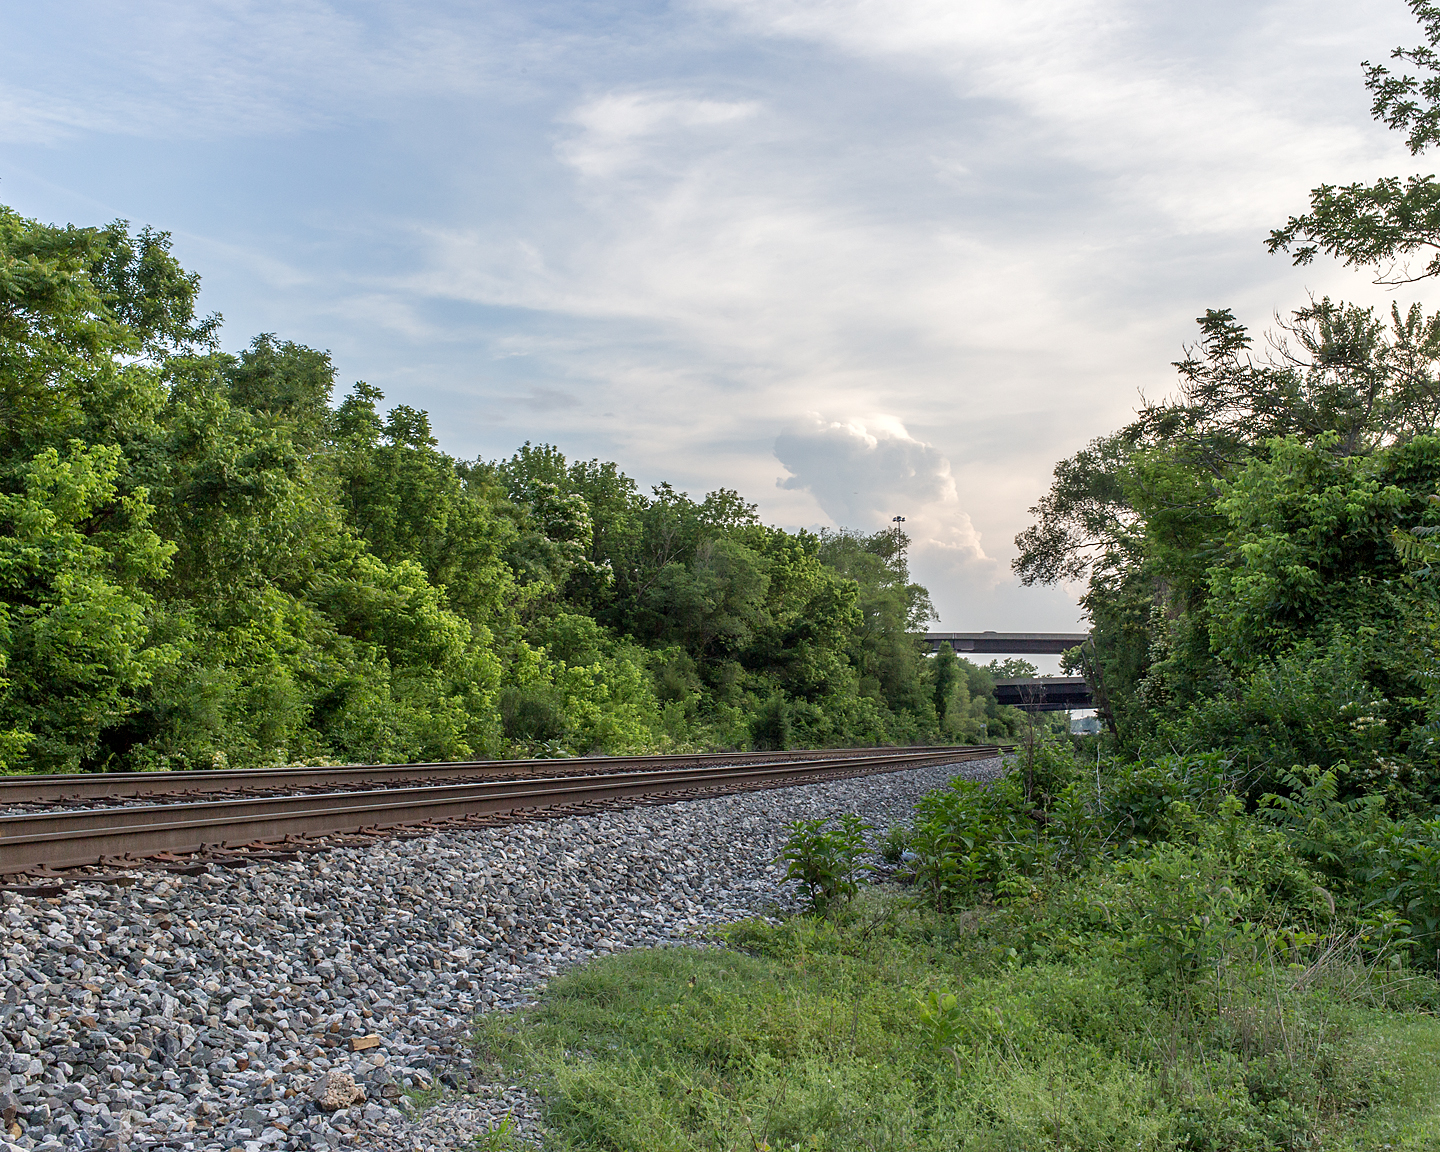  Train Tracks, 2015          